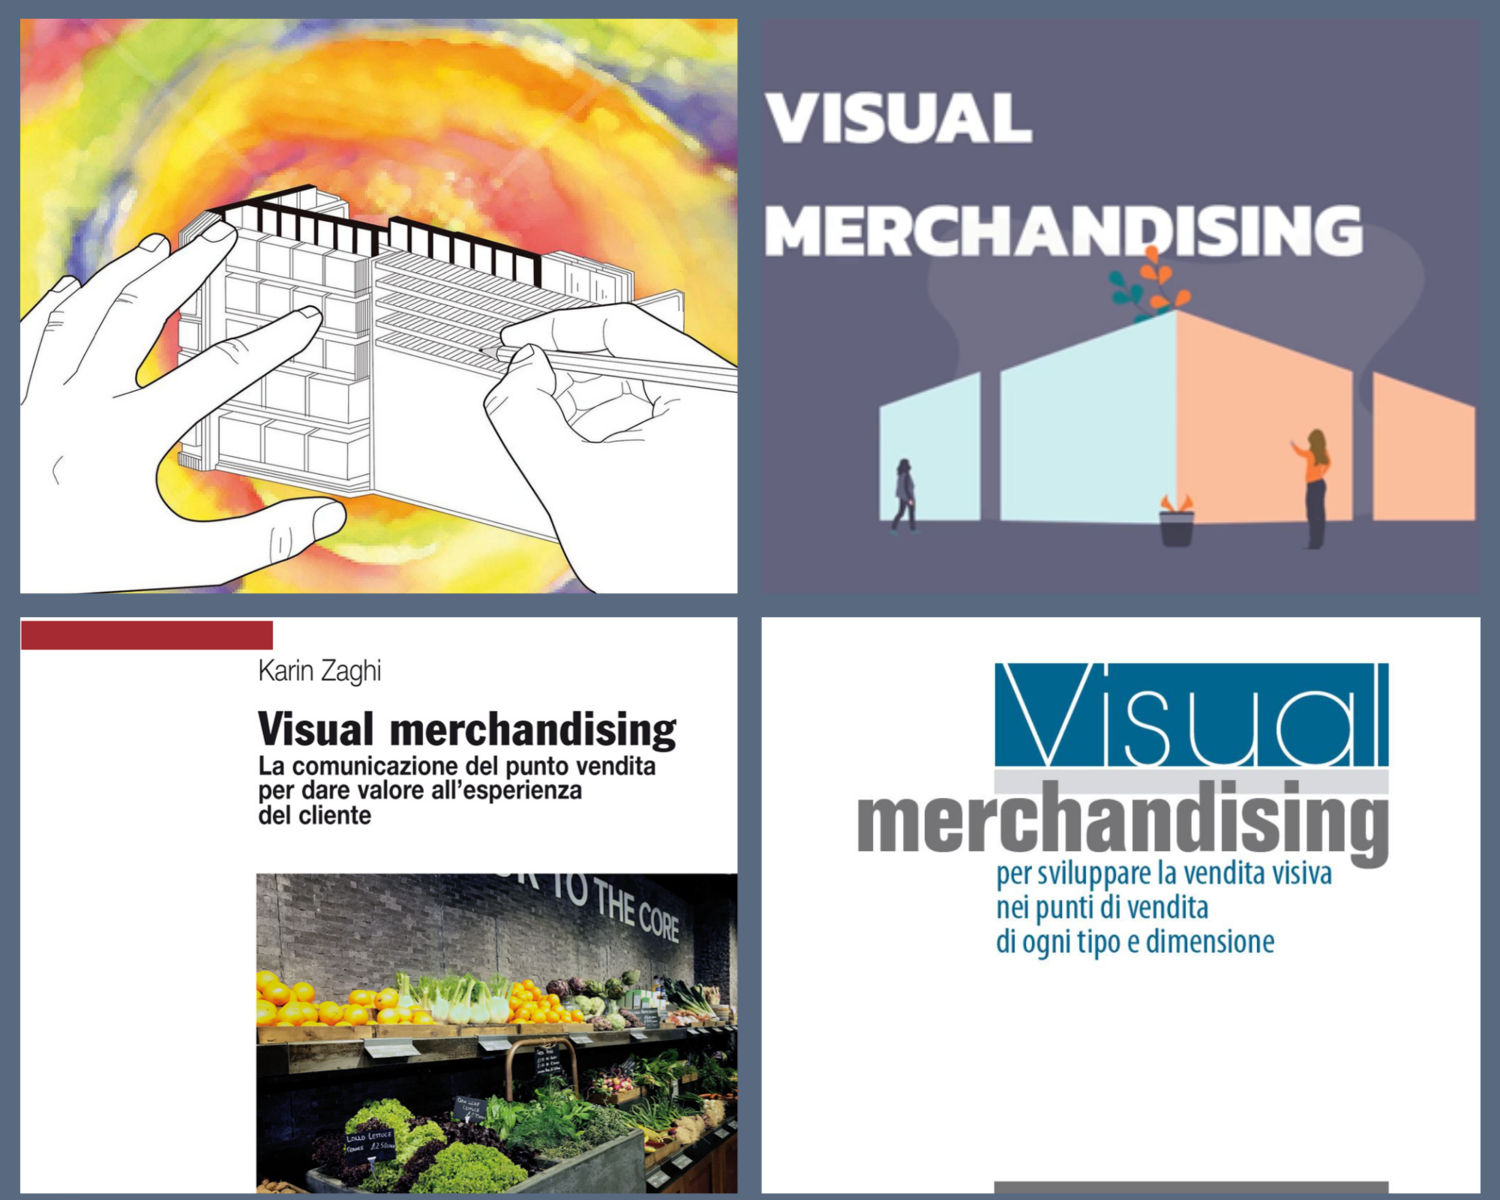 Il visual merchandising